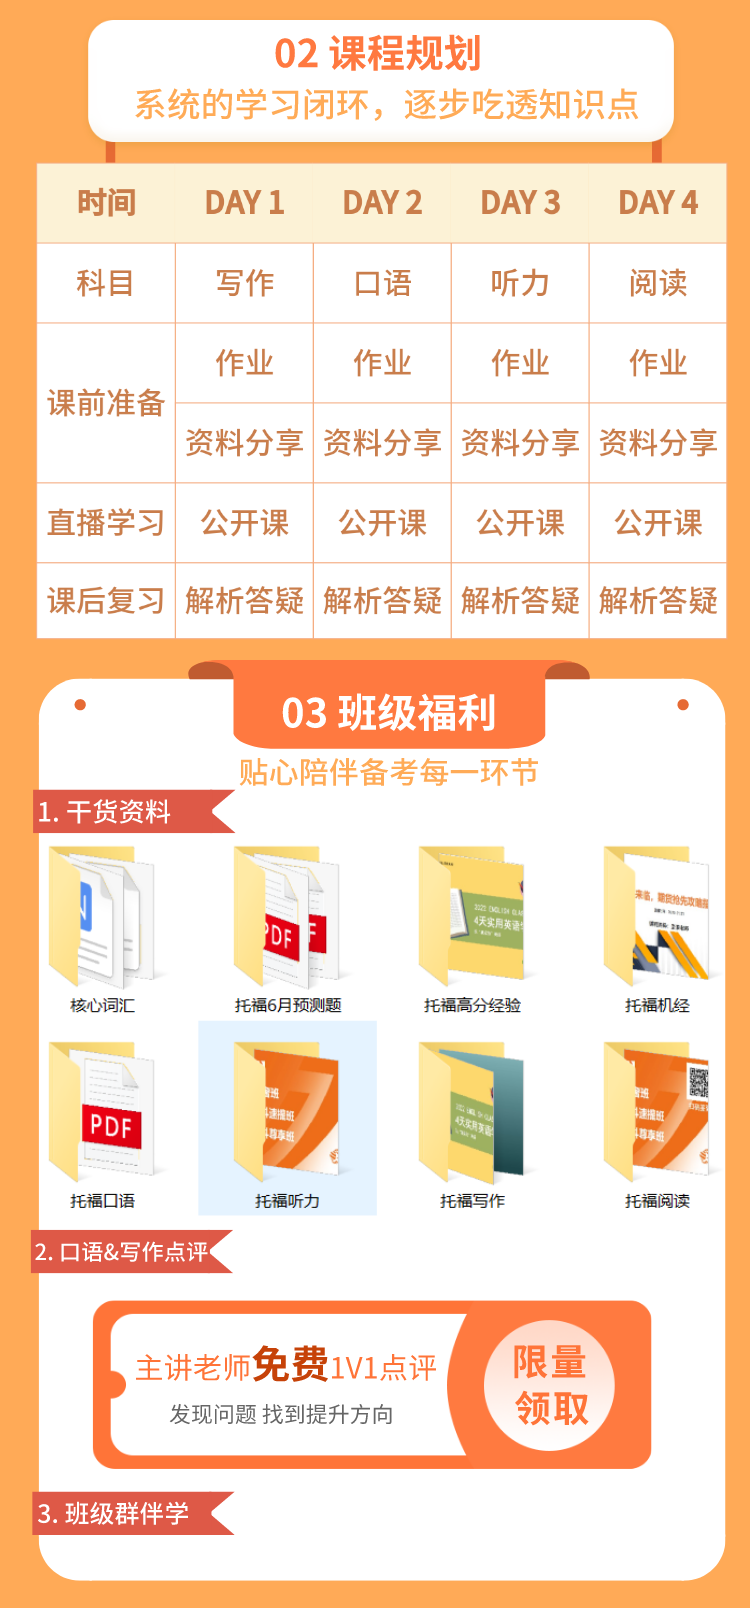 https://simg01.gaodunwangxiao.com/uploadfiles/product-center/202208/31/a4943_20220831145506.png